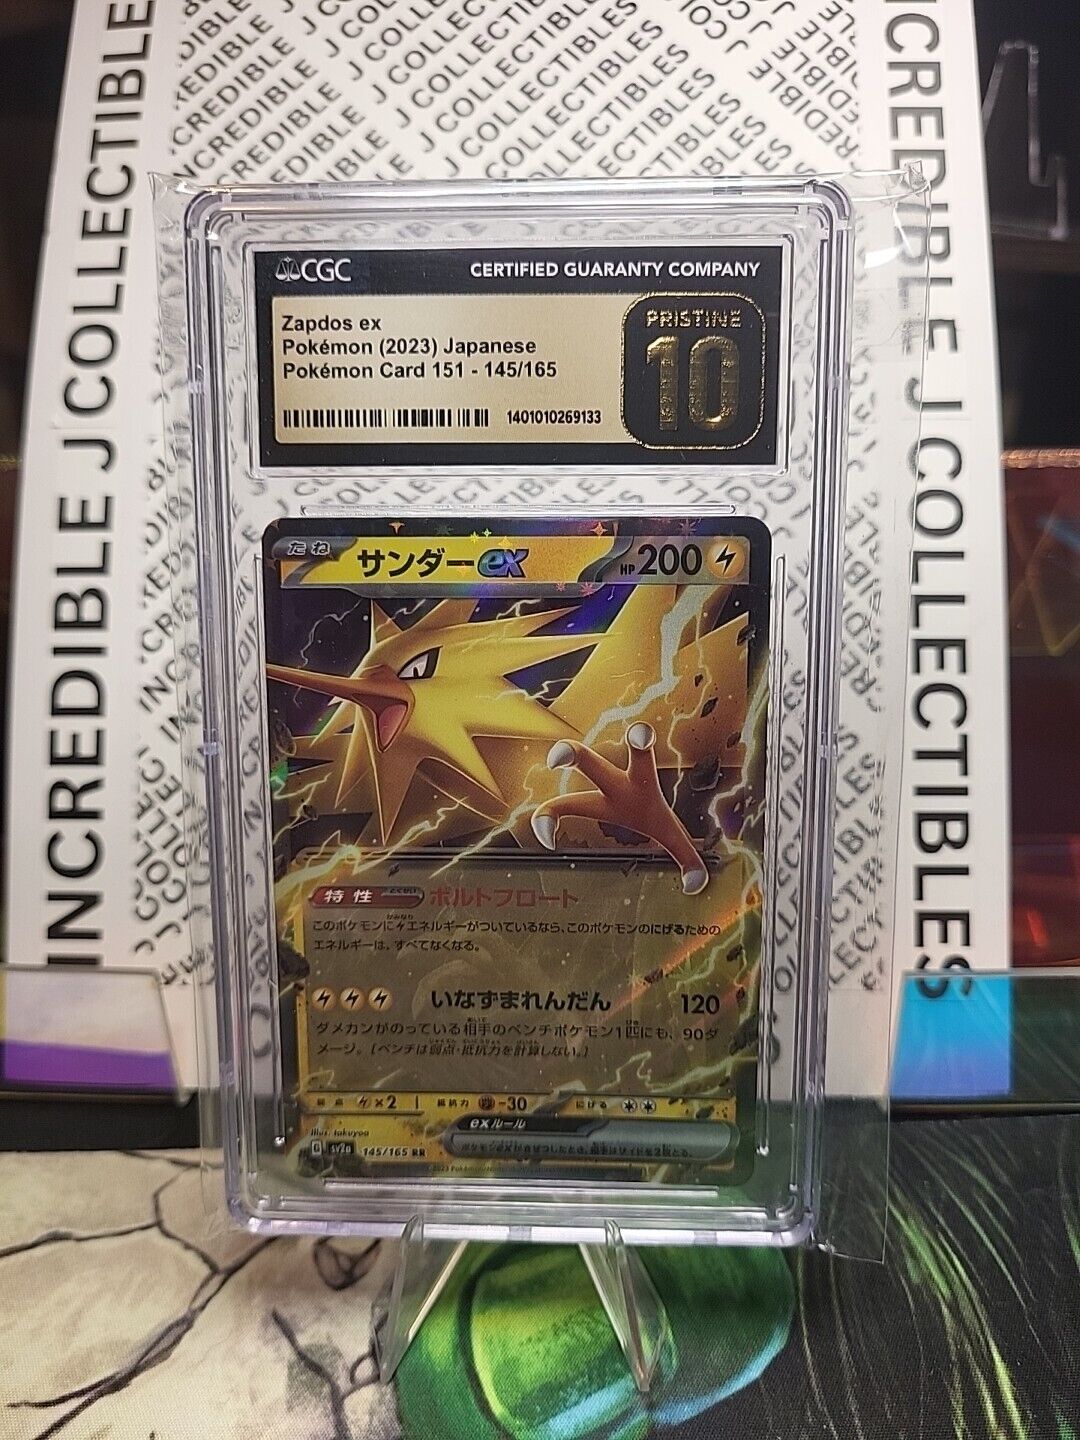 ZAPDOS EX Pokémon 2023 Japanese Pokémon Card 151 # 145/165 CGC Pristine 10